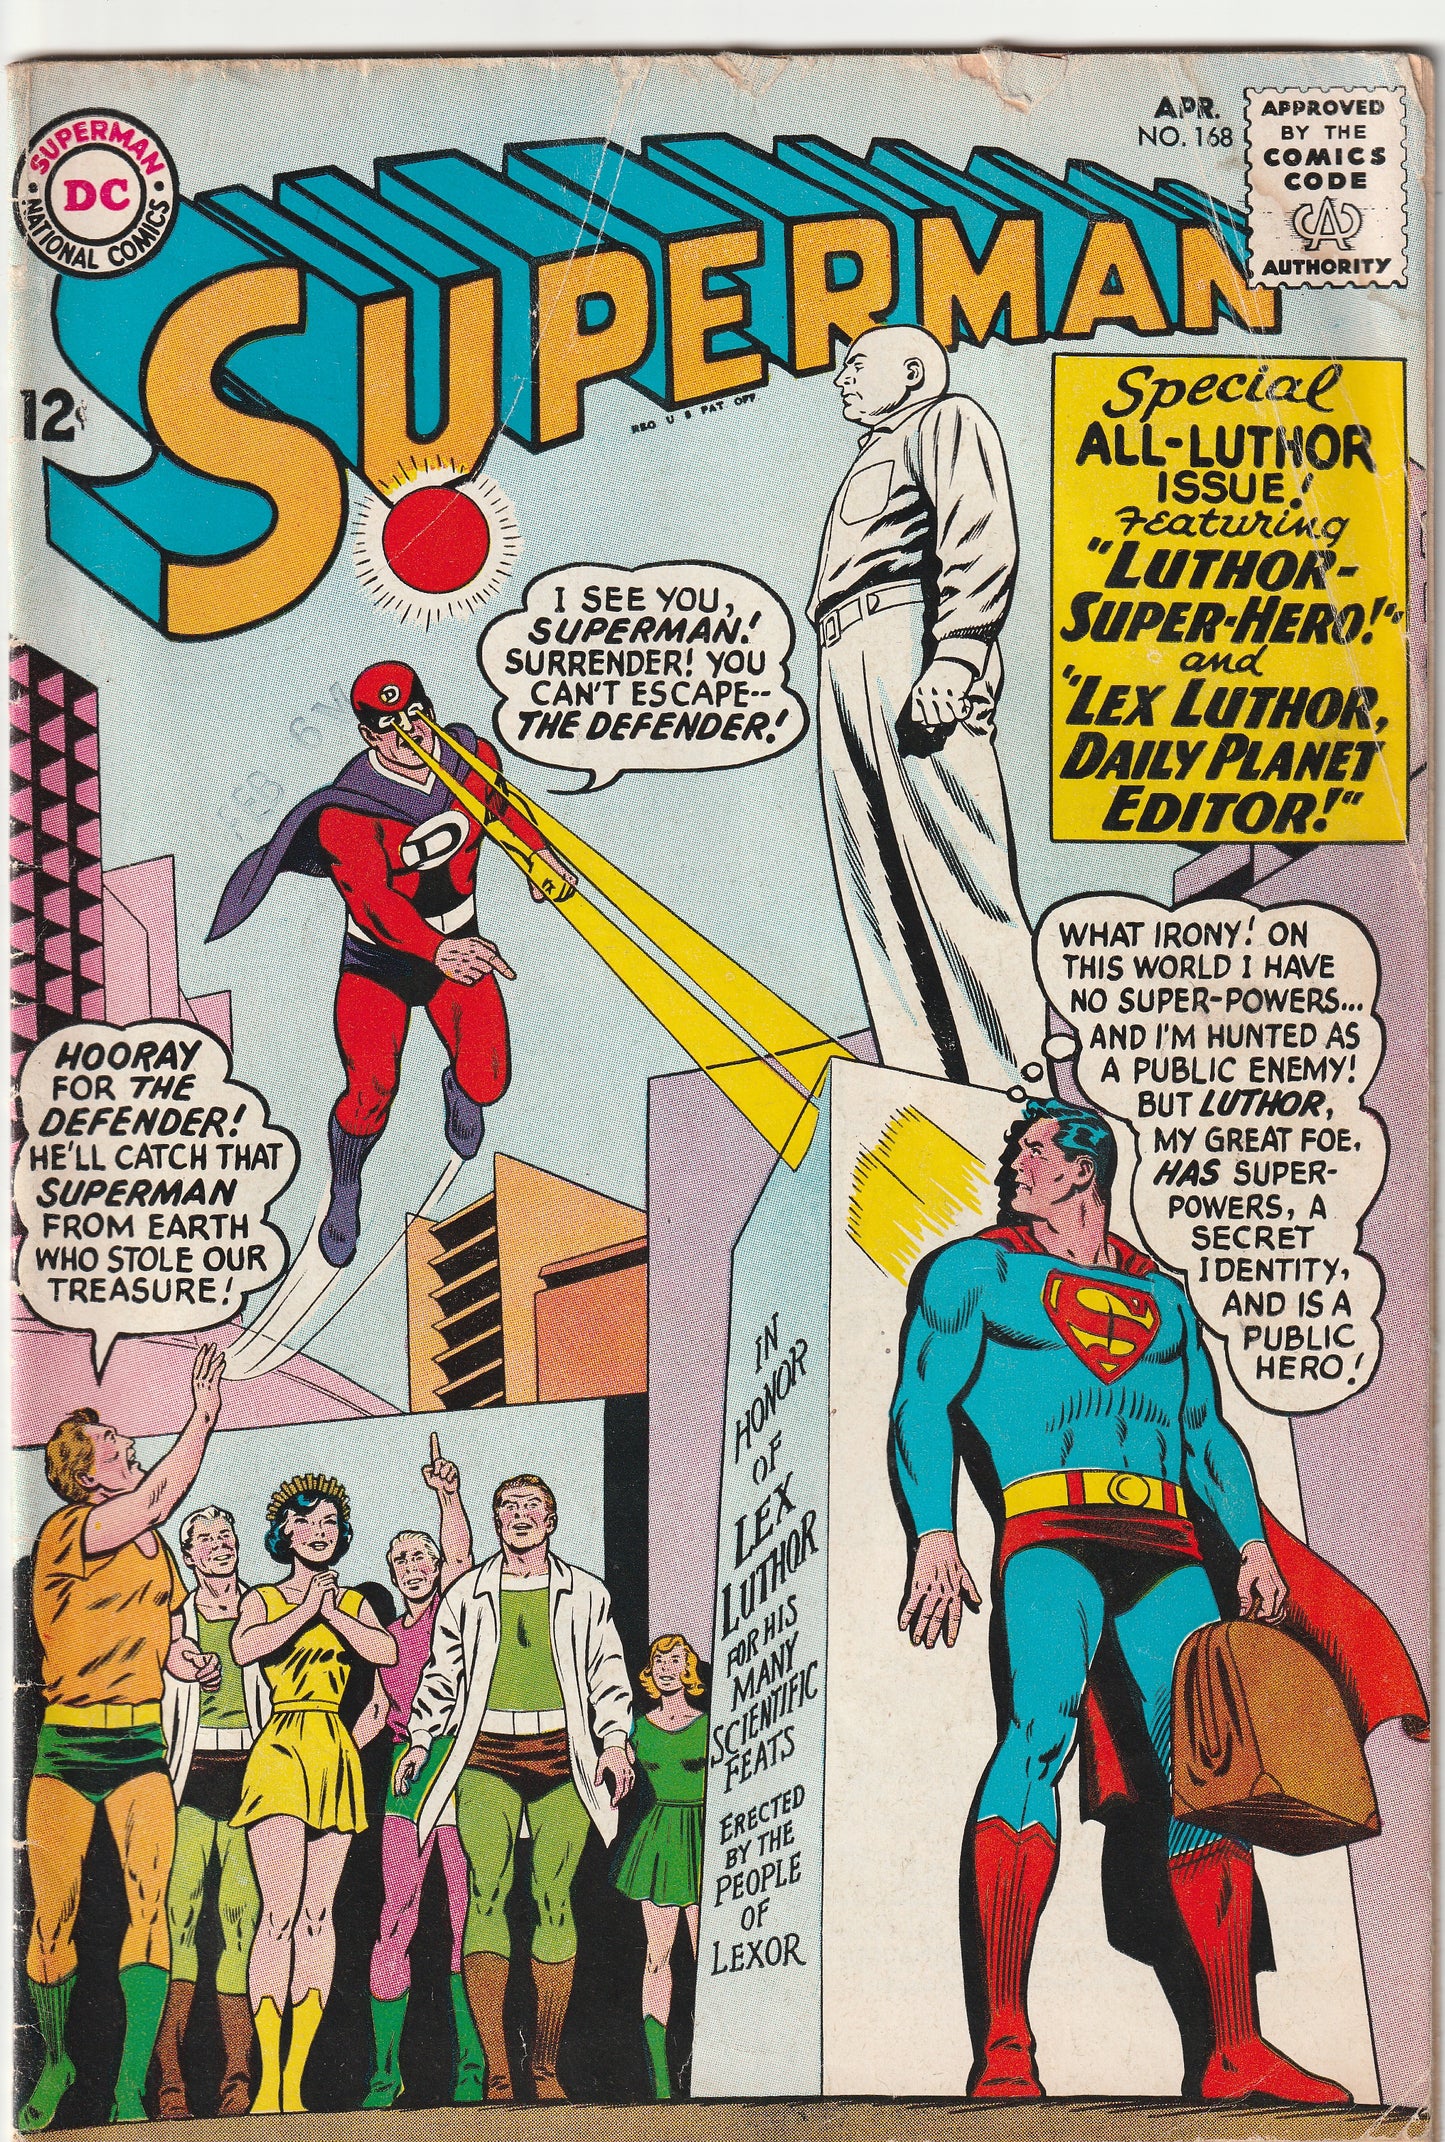 Superman #168 (1964)